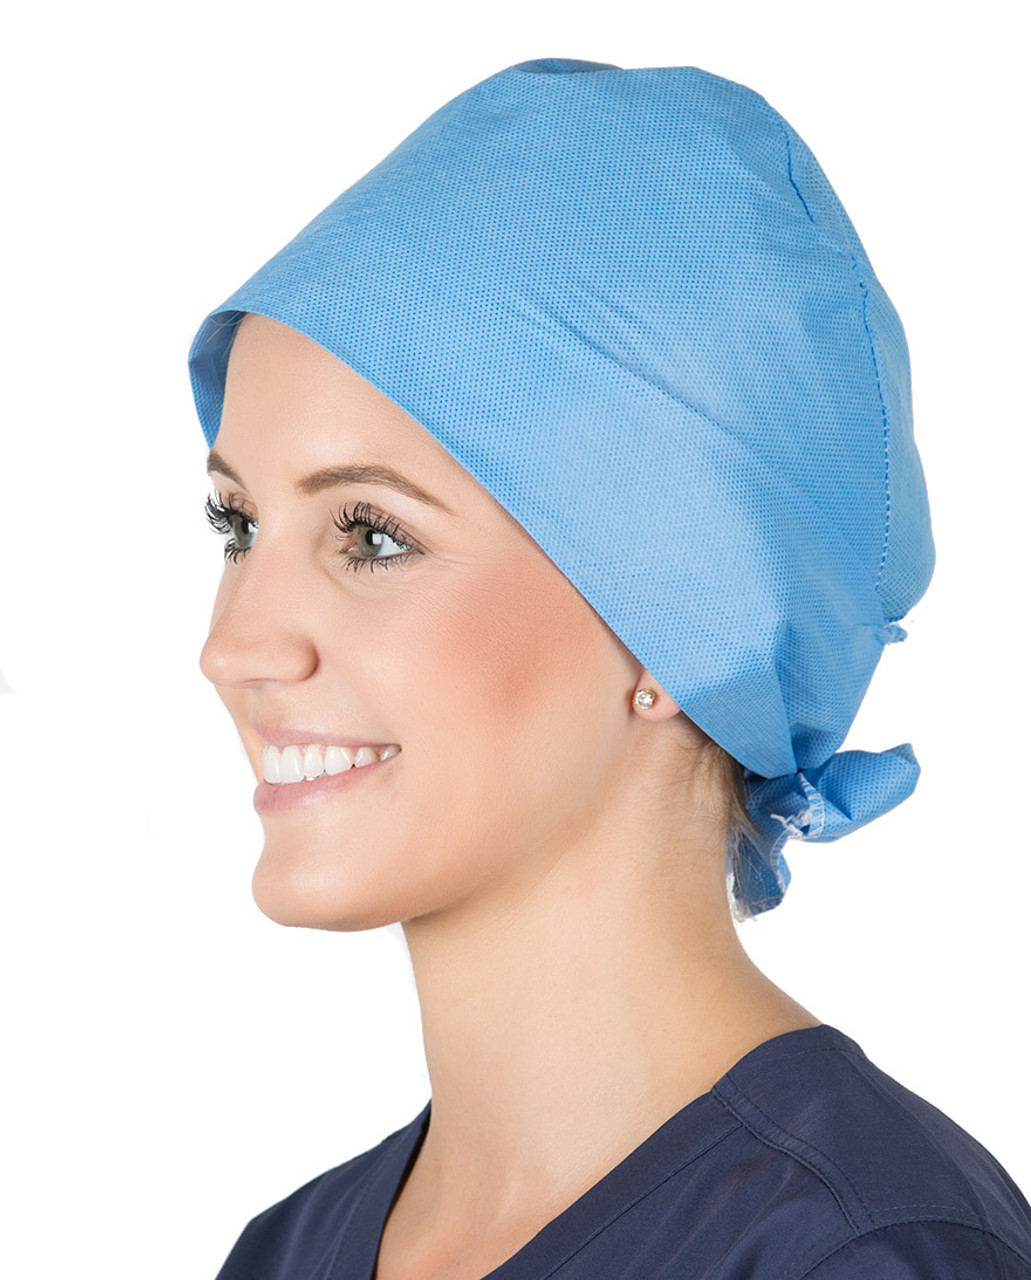 Men's Scrub Hats & Surgical Caps - Blue Sky Scrubs